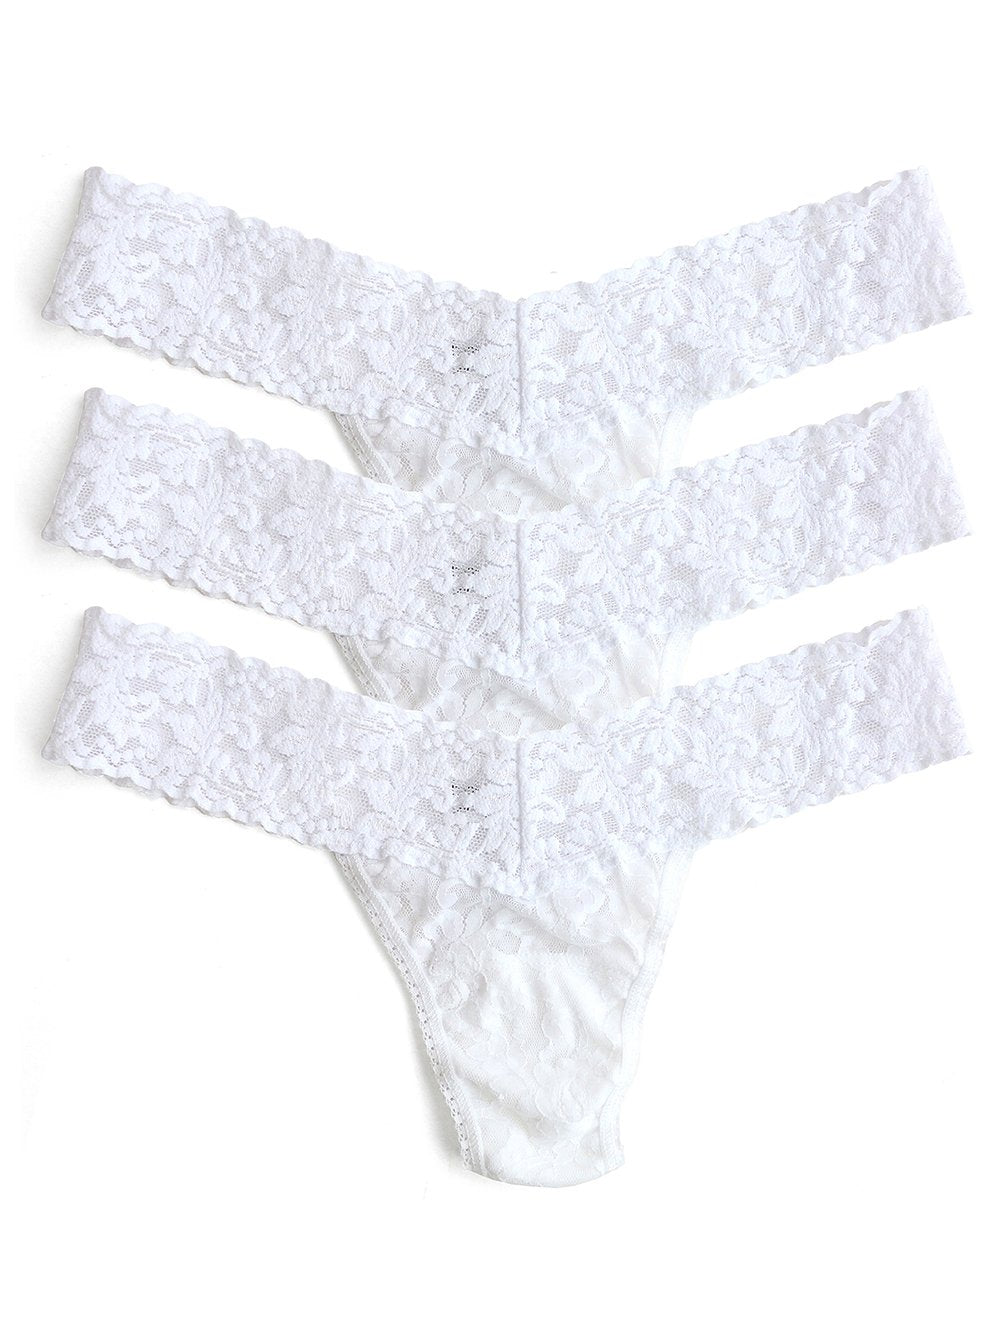 HauteFlair Panties White 3 Pack Low Rise Thongs